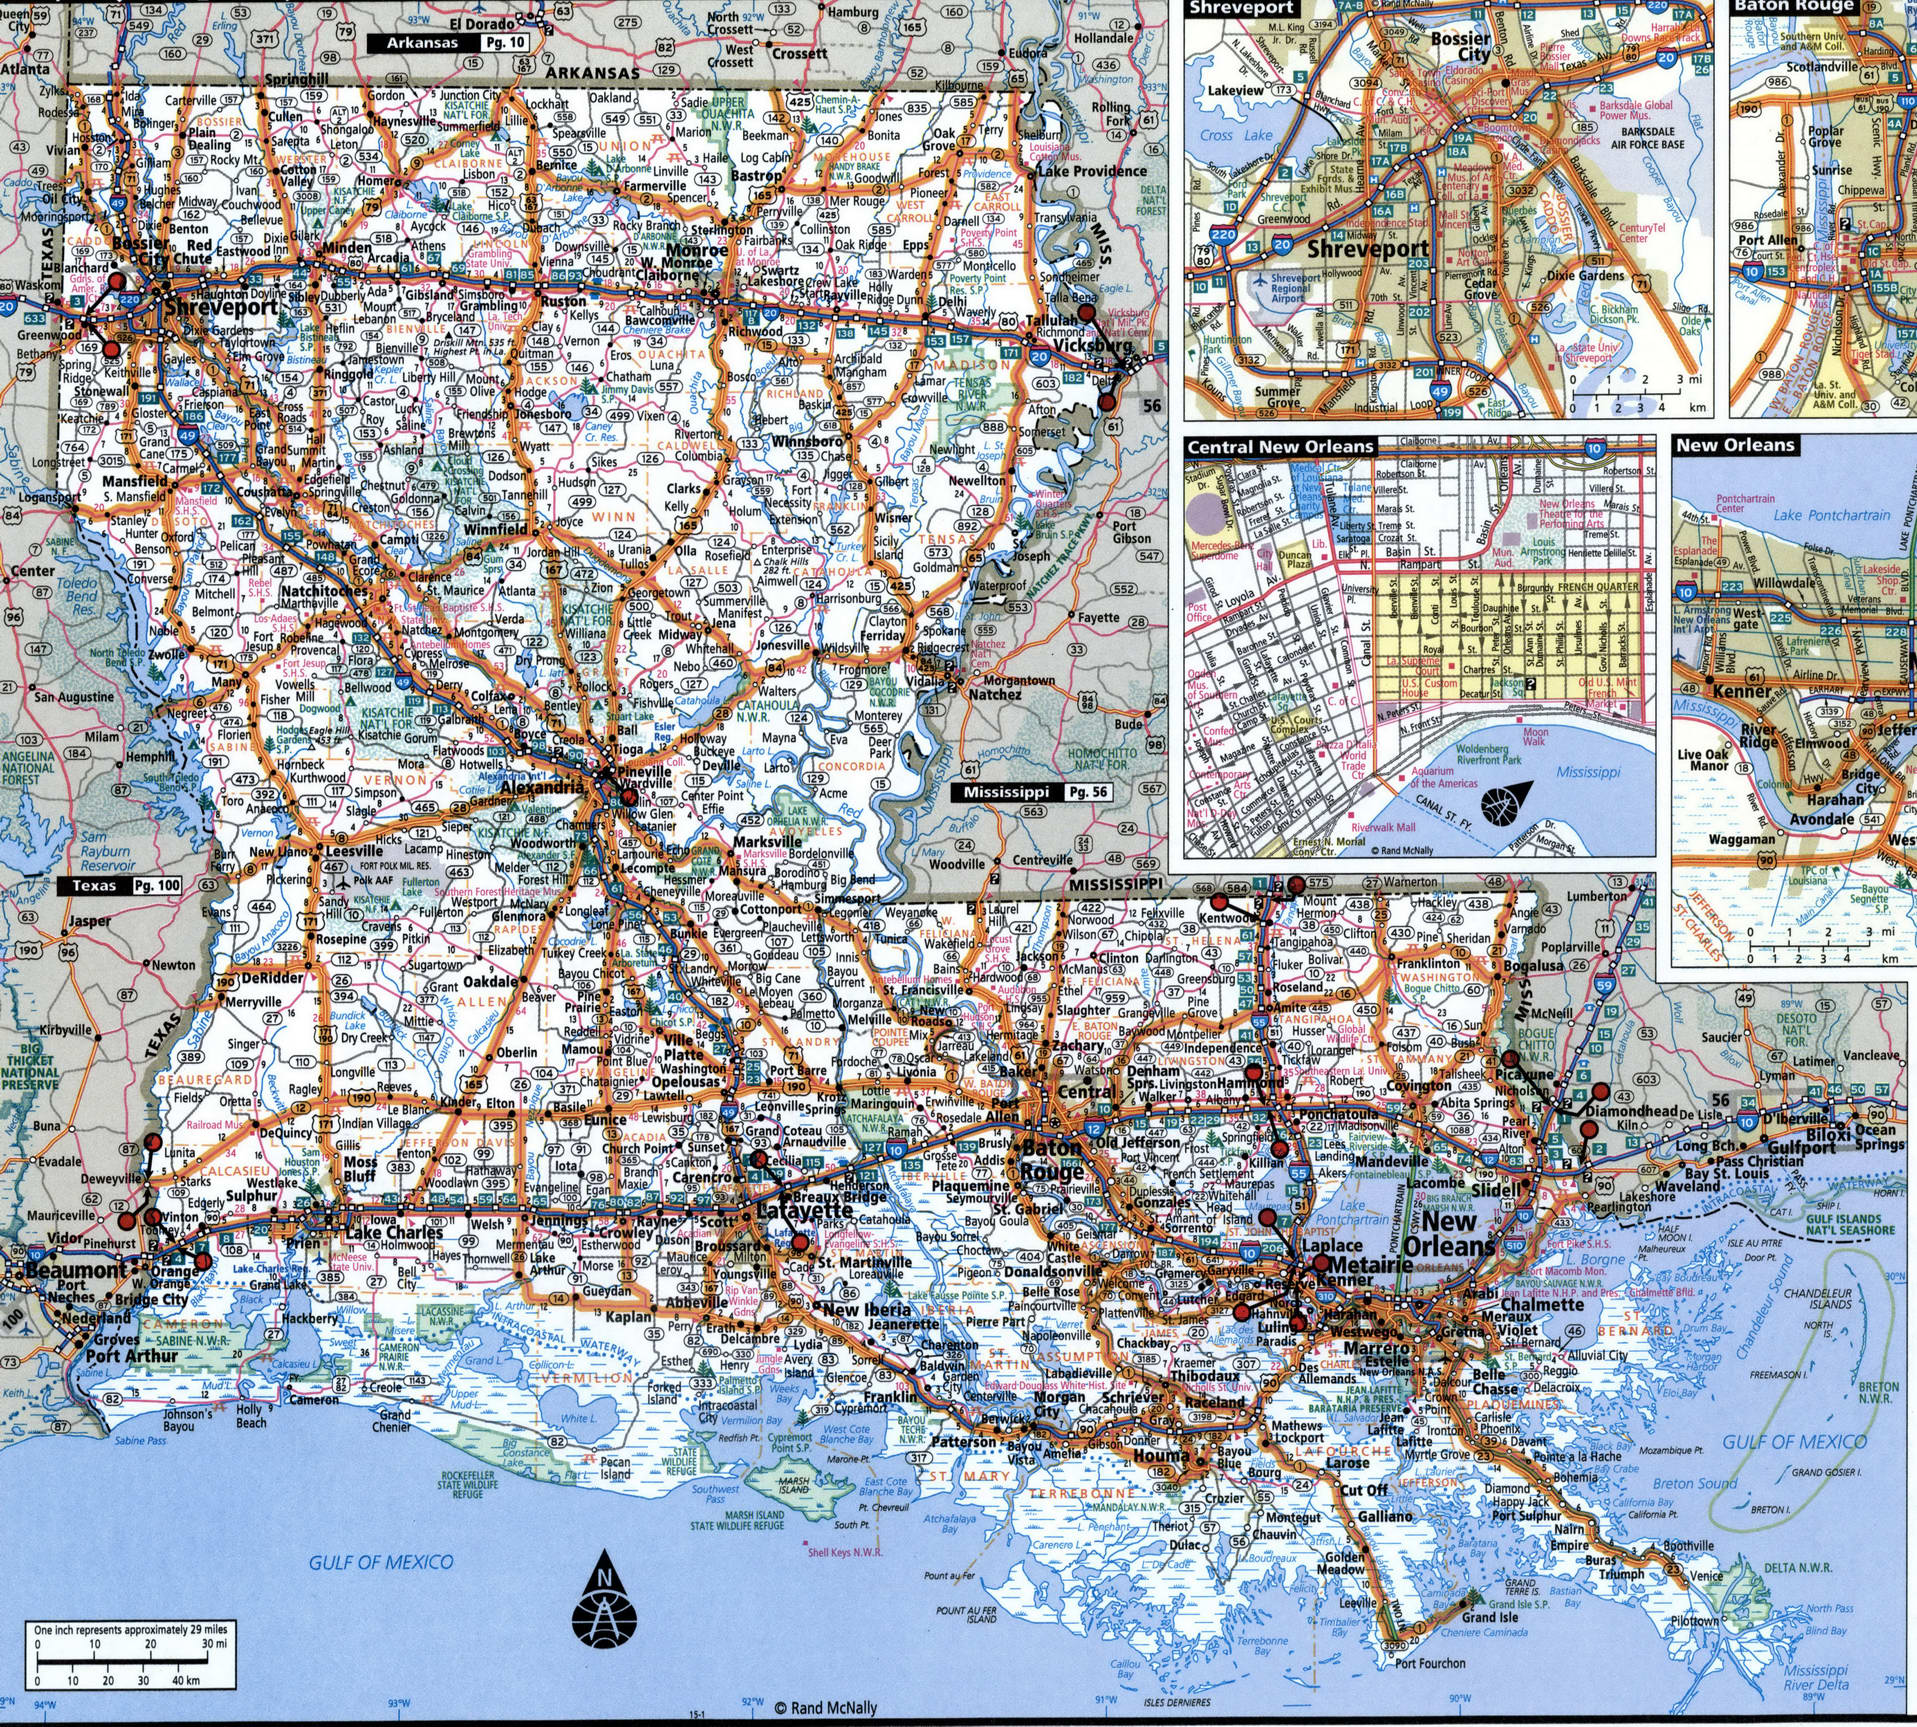 Louisiana map for truckers